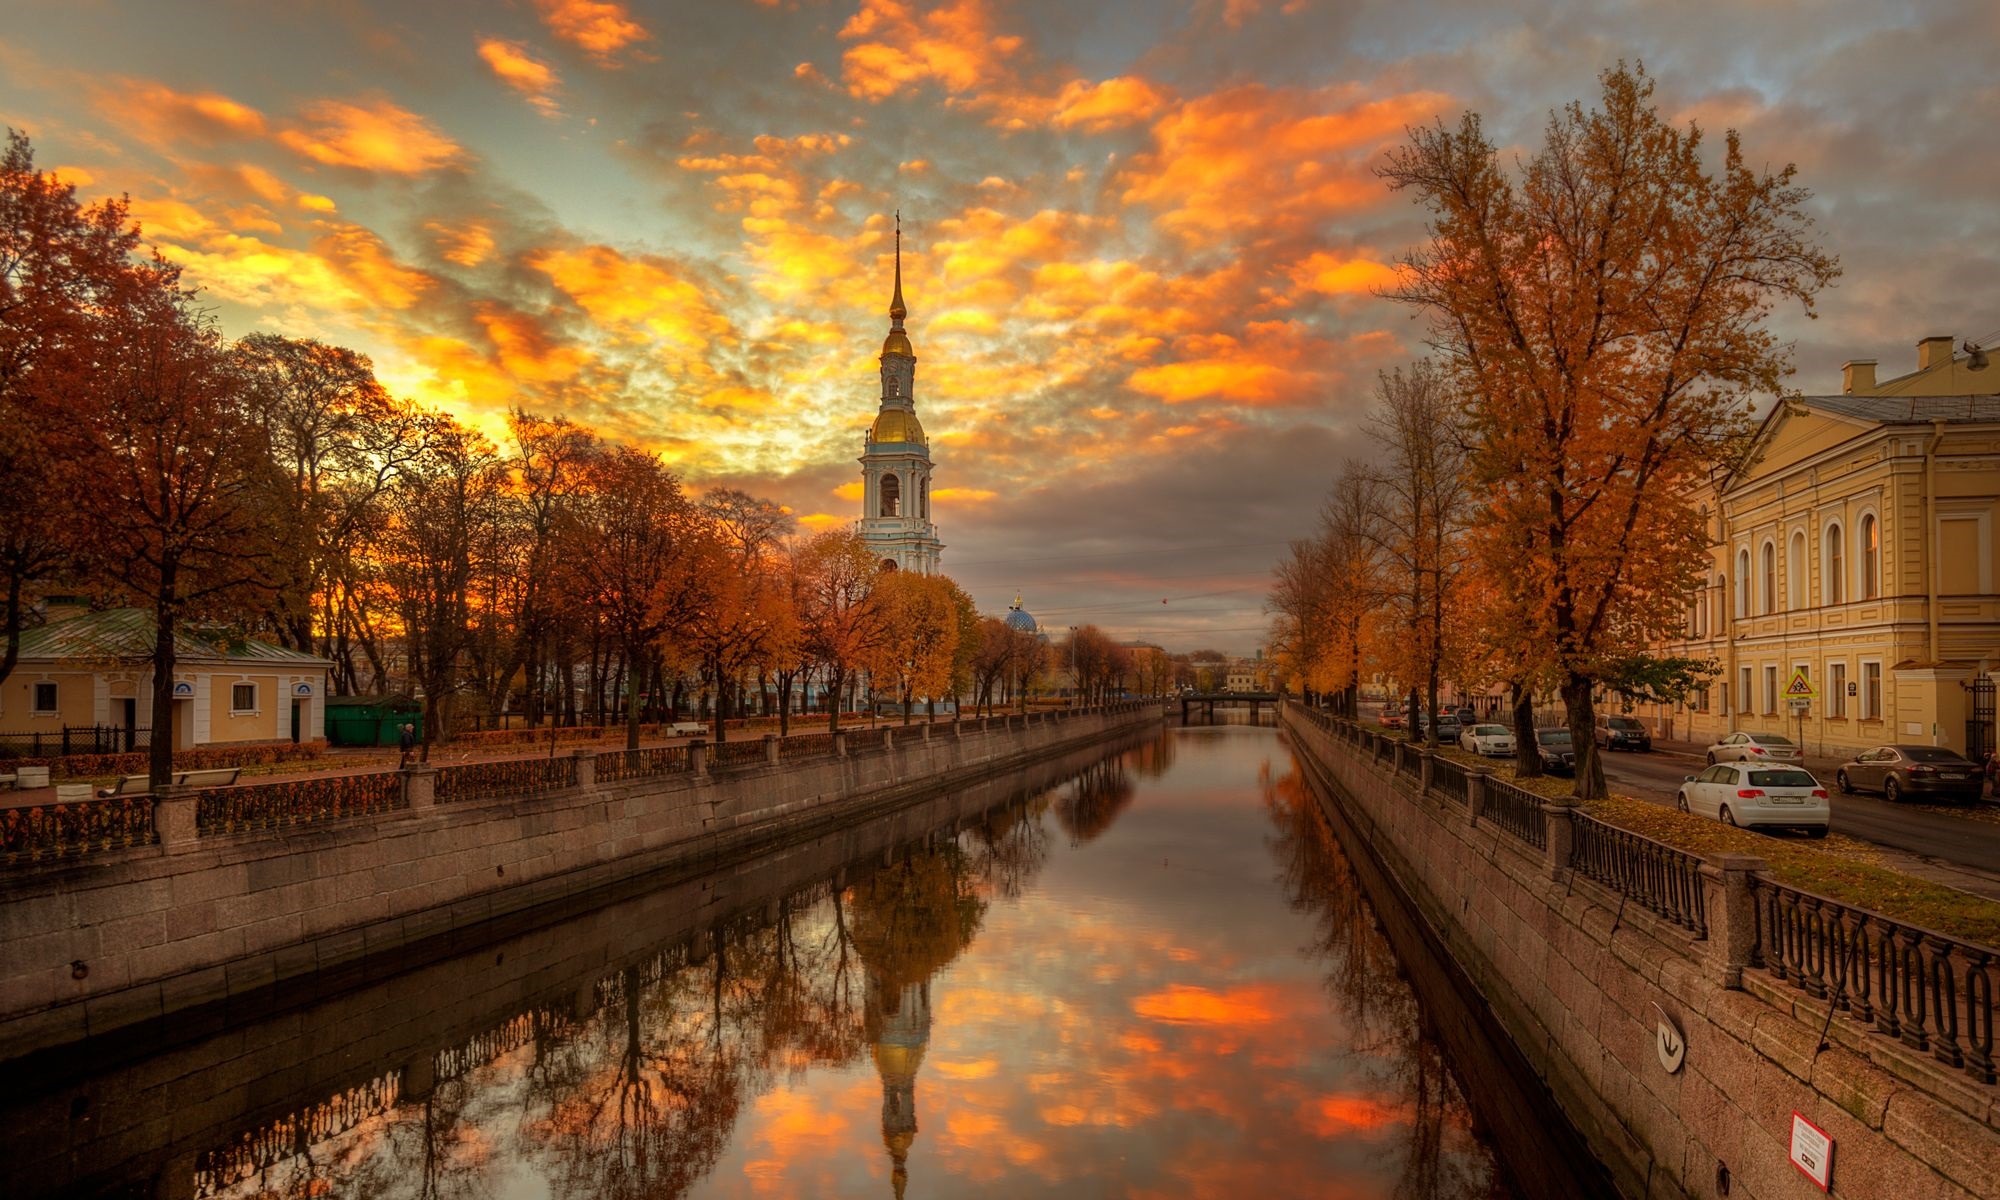 Saint Petersburg canal in autumn.